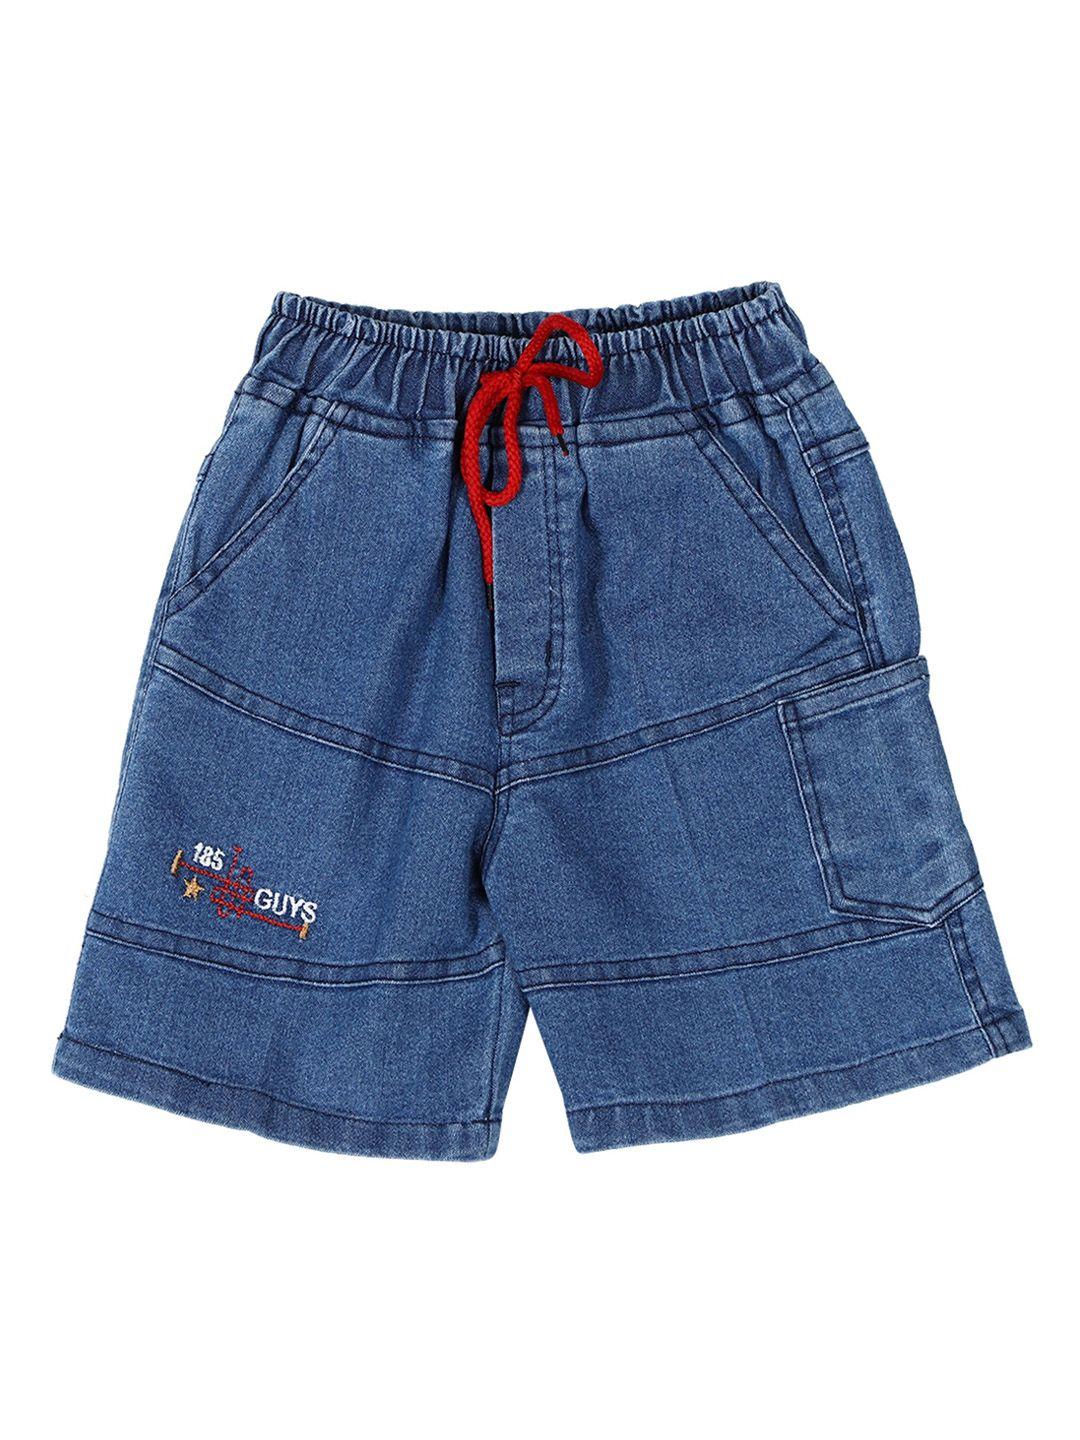 cremlin clothing unisex kids blue denim shorts